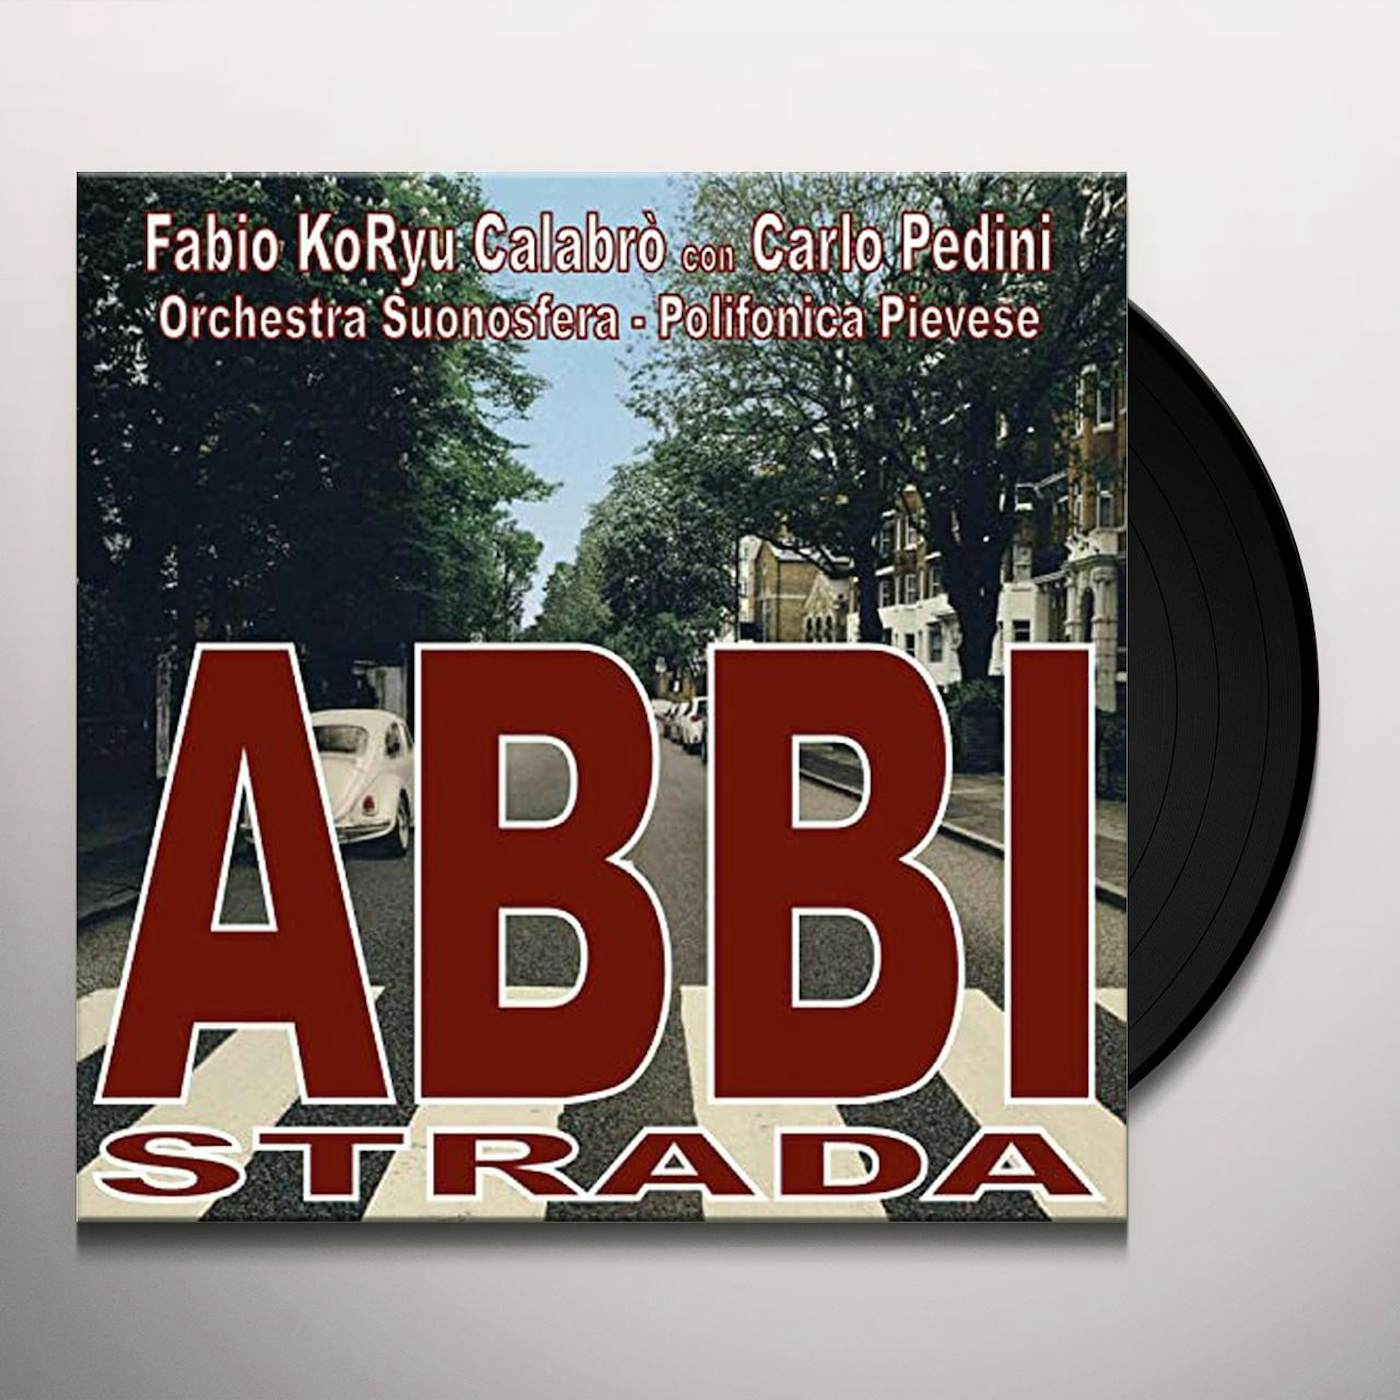 Fabio Koryu Calabro / Carlo Pedini ABBI STRADA Vinyl Record